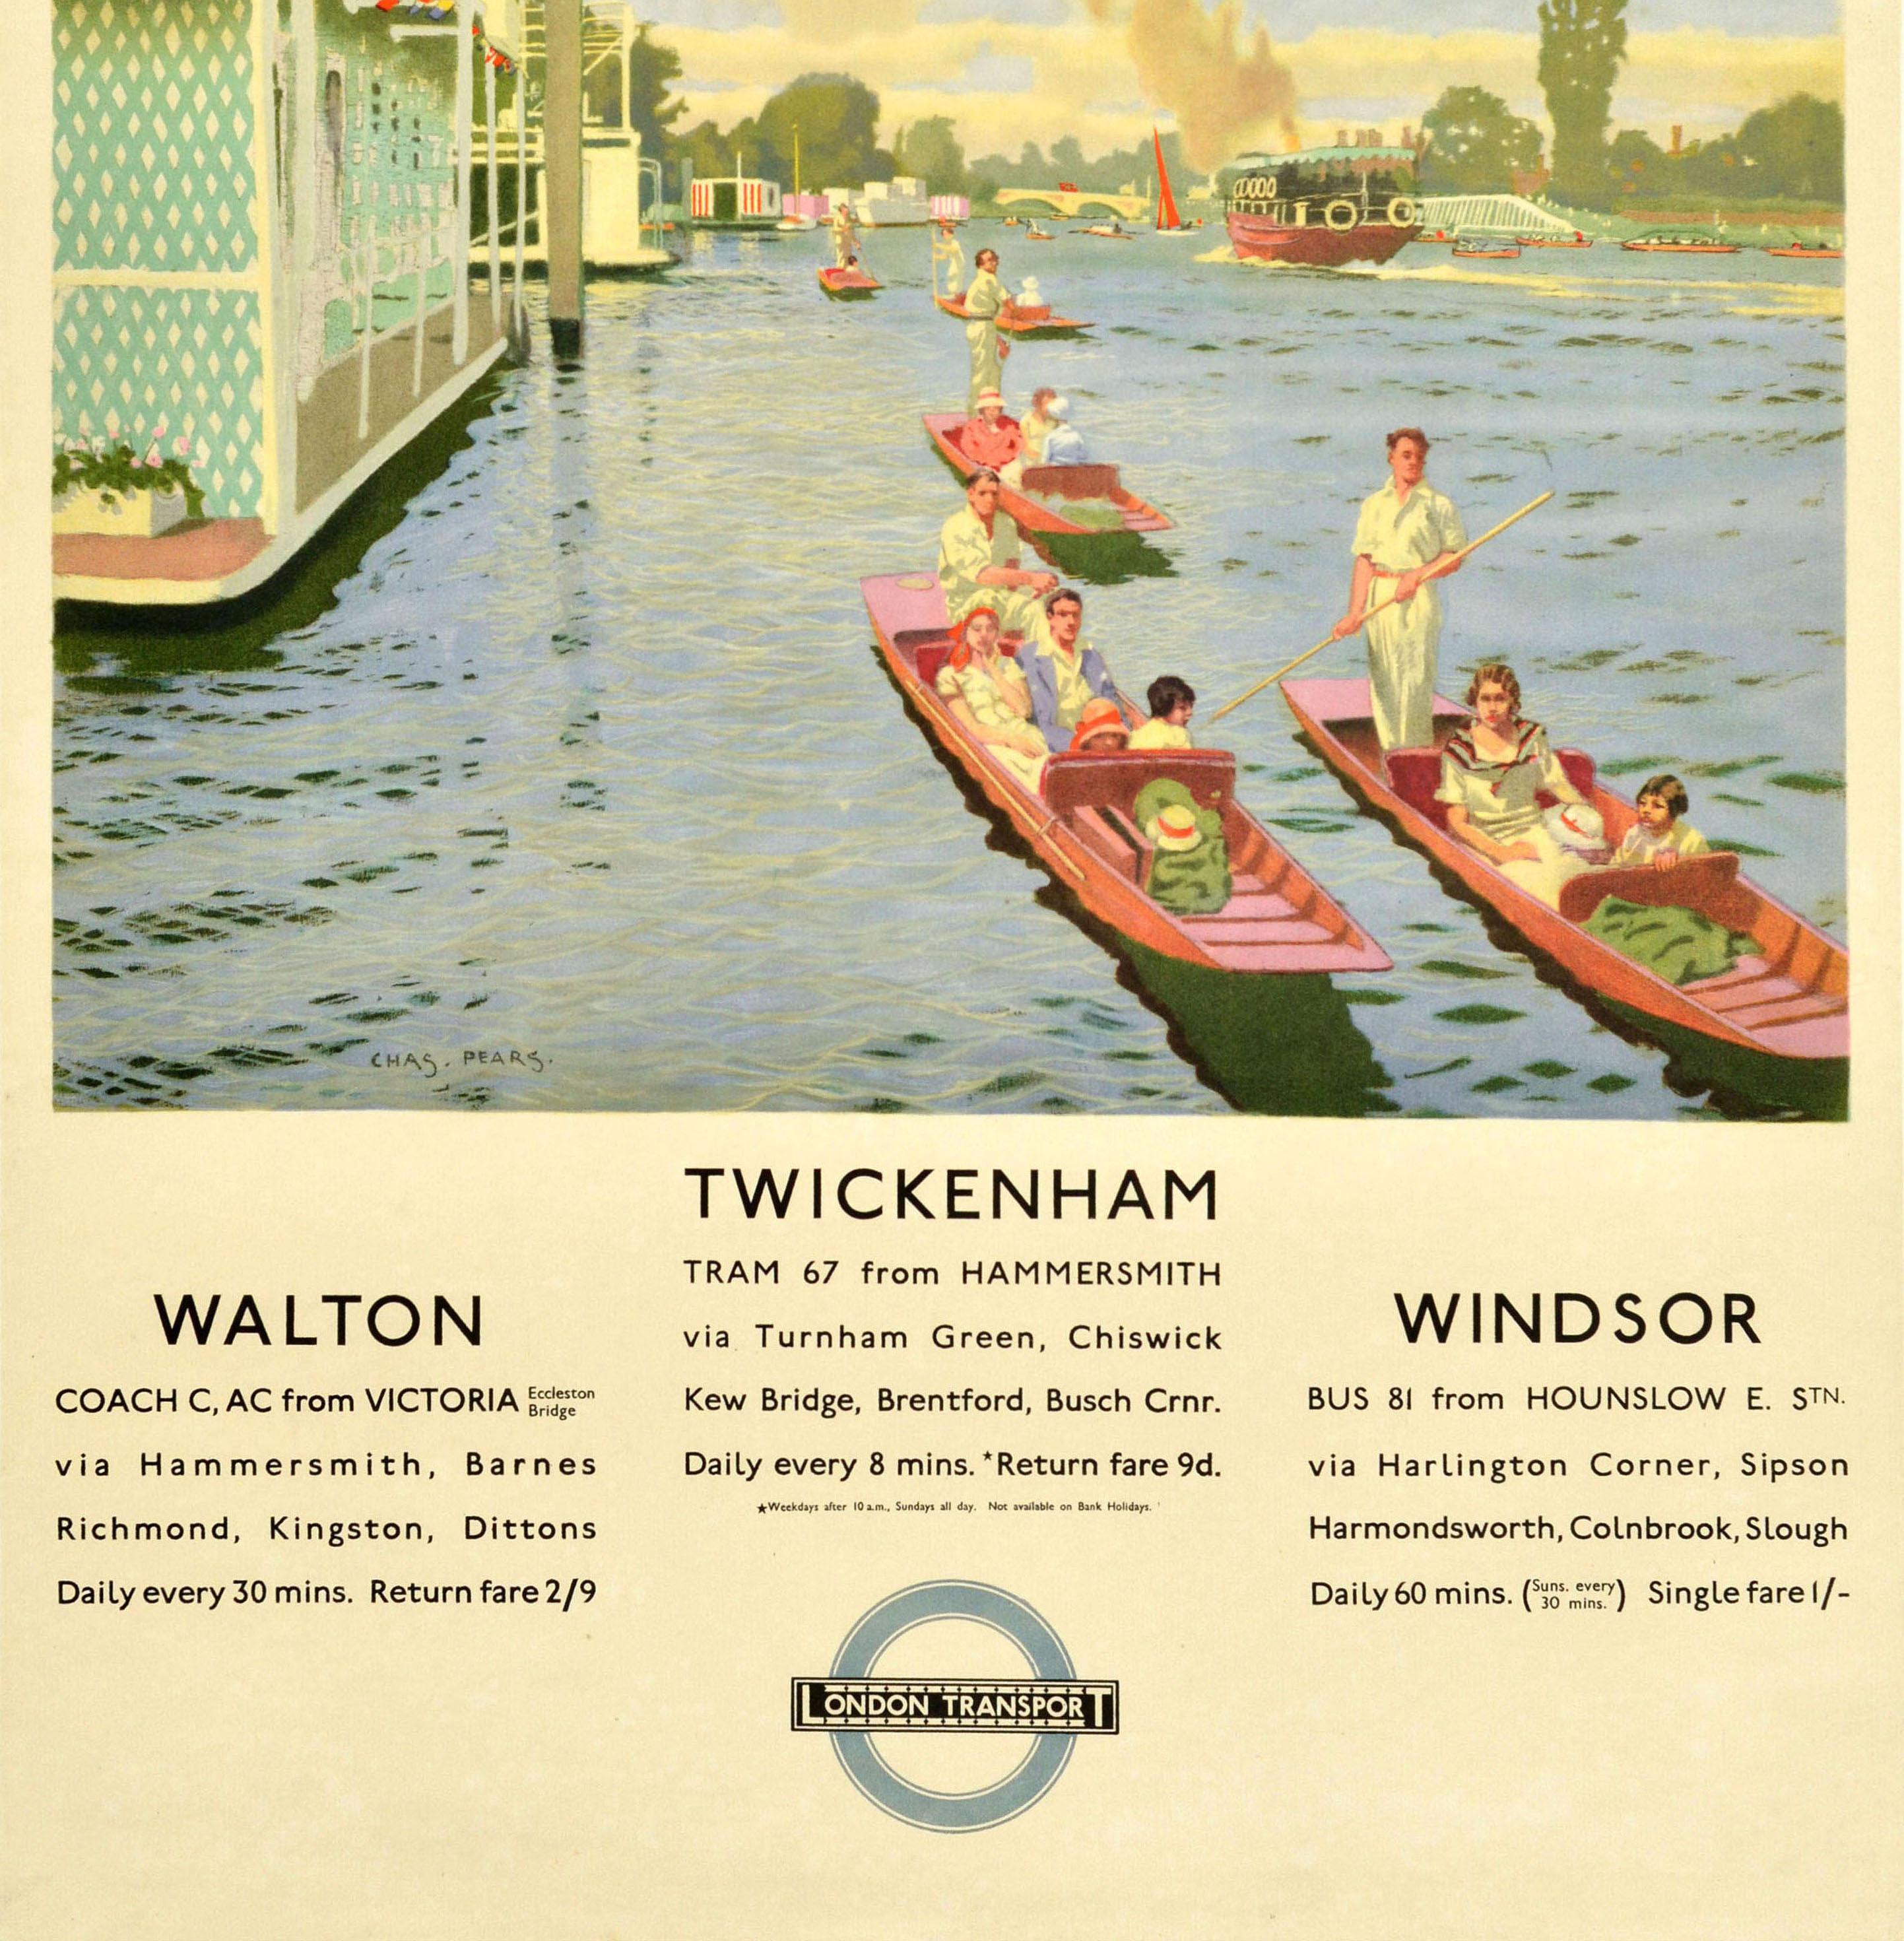 Original Vintage London Transport Travel Poster Twickenham Walton Windsor Pears - Beige Print by Charles Pears